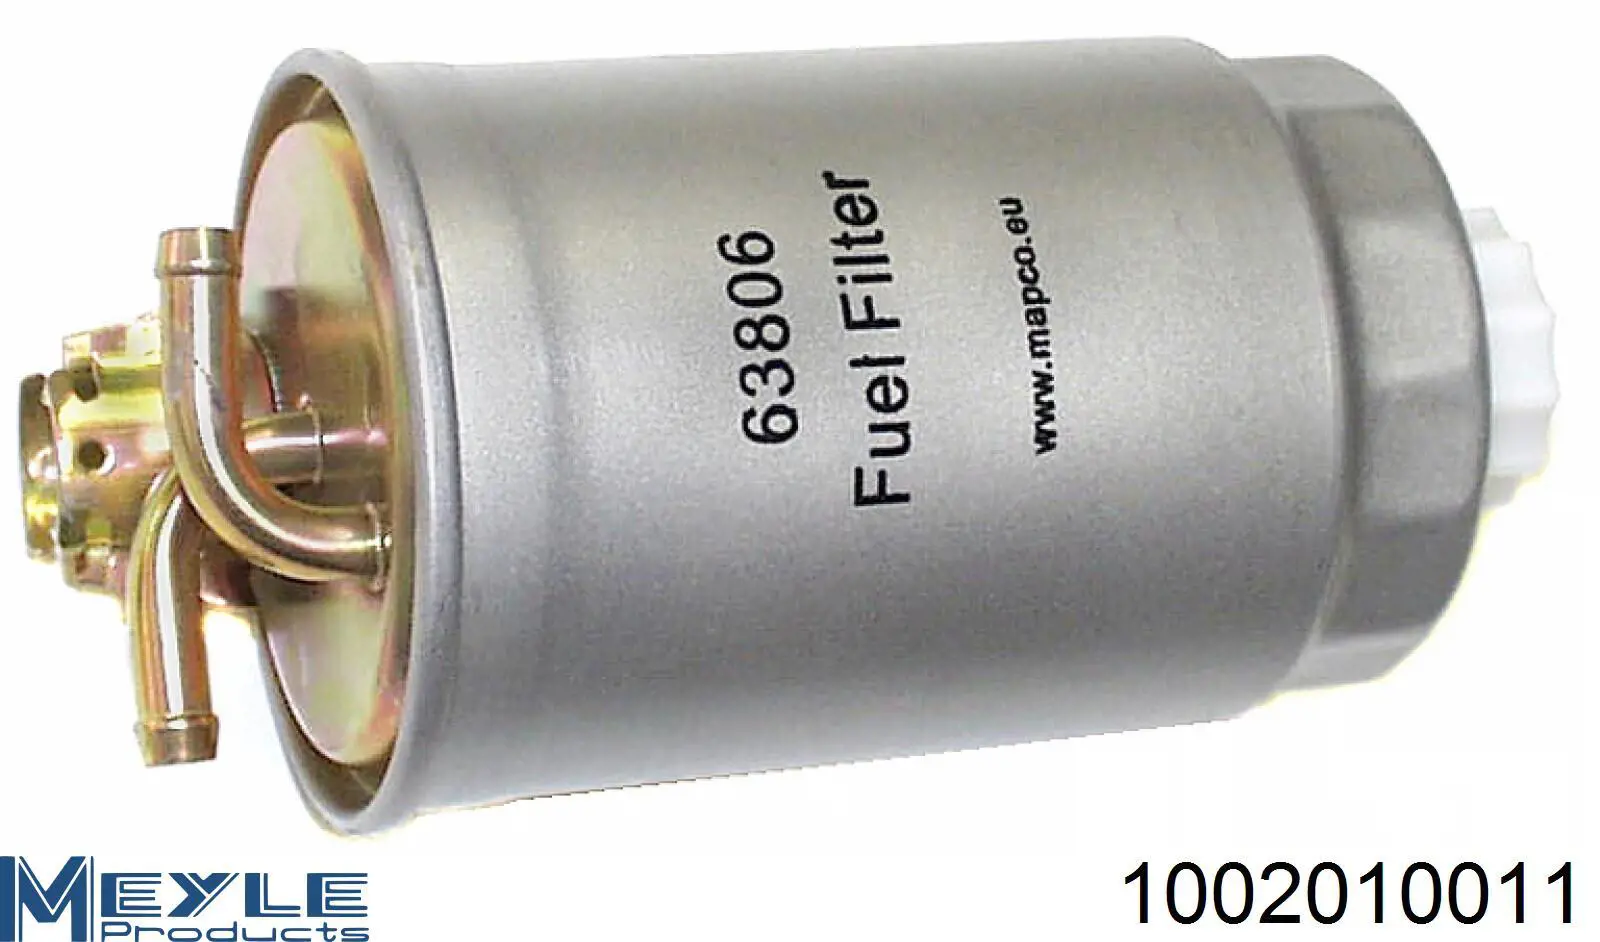 EFF507420 Open Parts filtro combustible